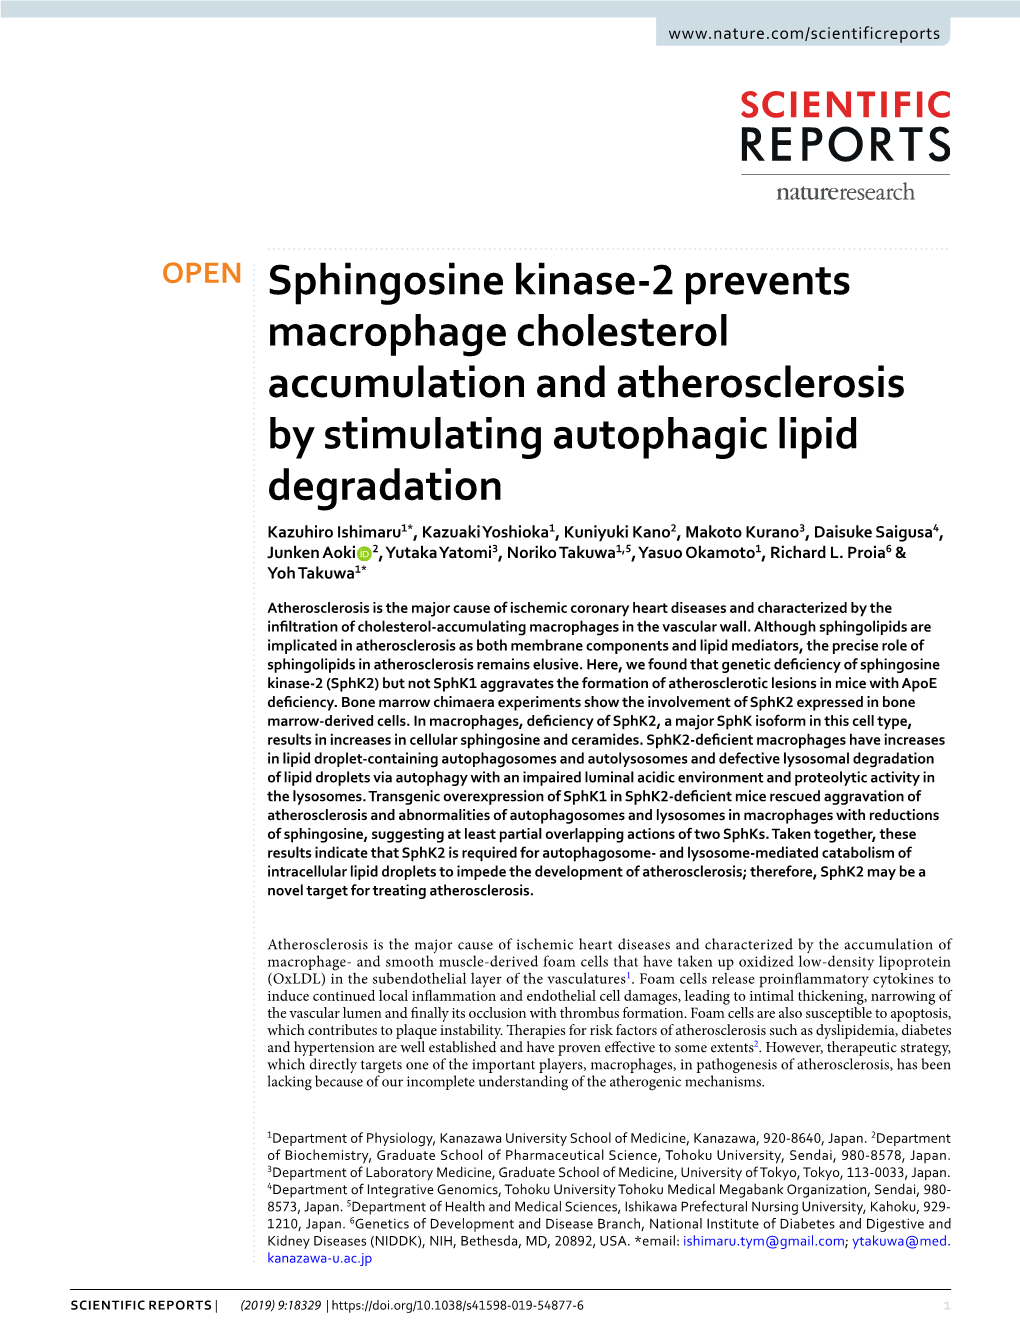 Sphingosine Kinase-2 Prevents Macrophage Cholesterol